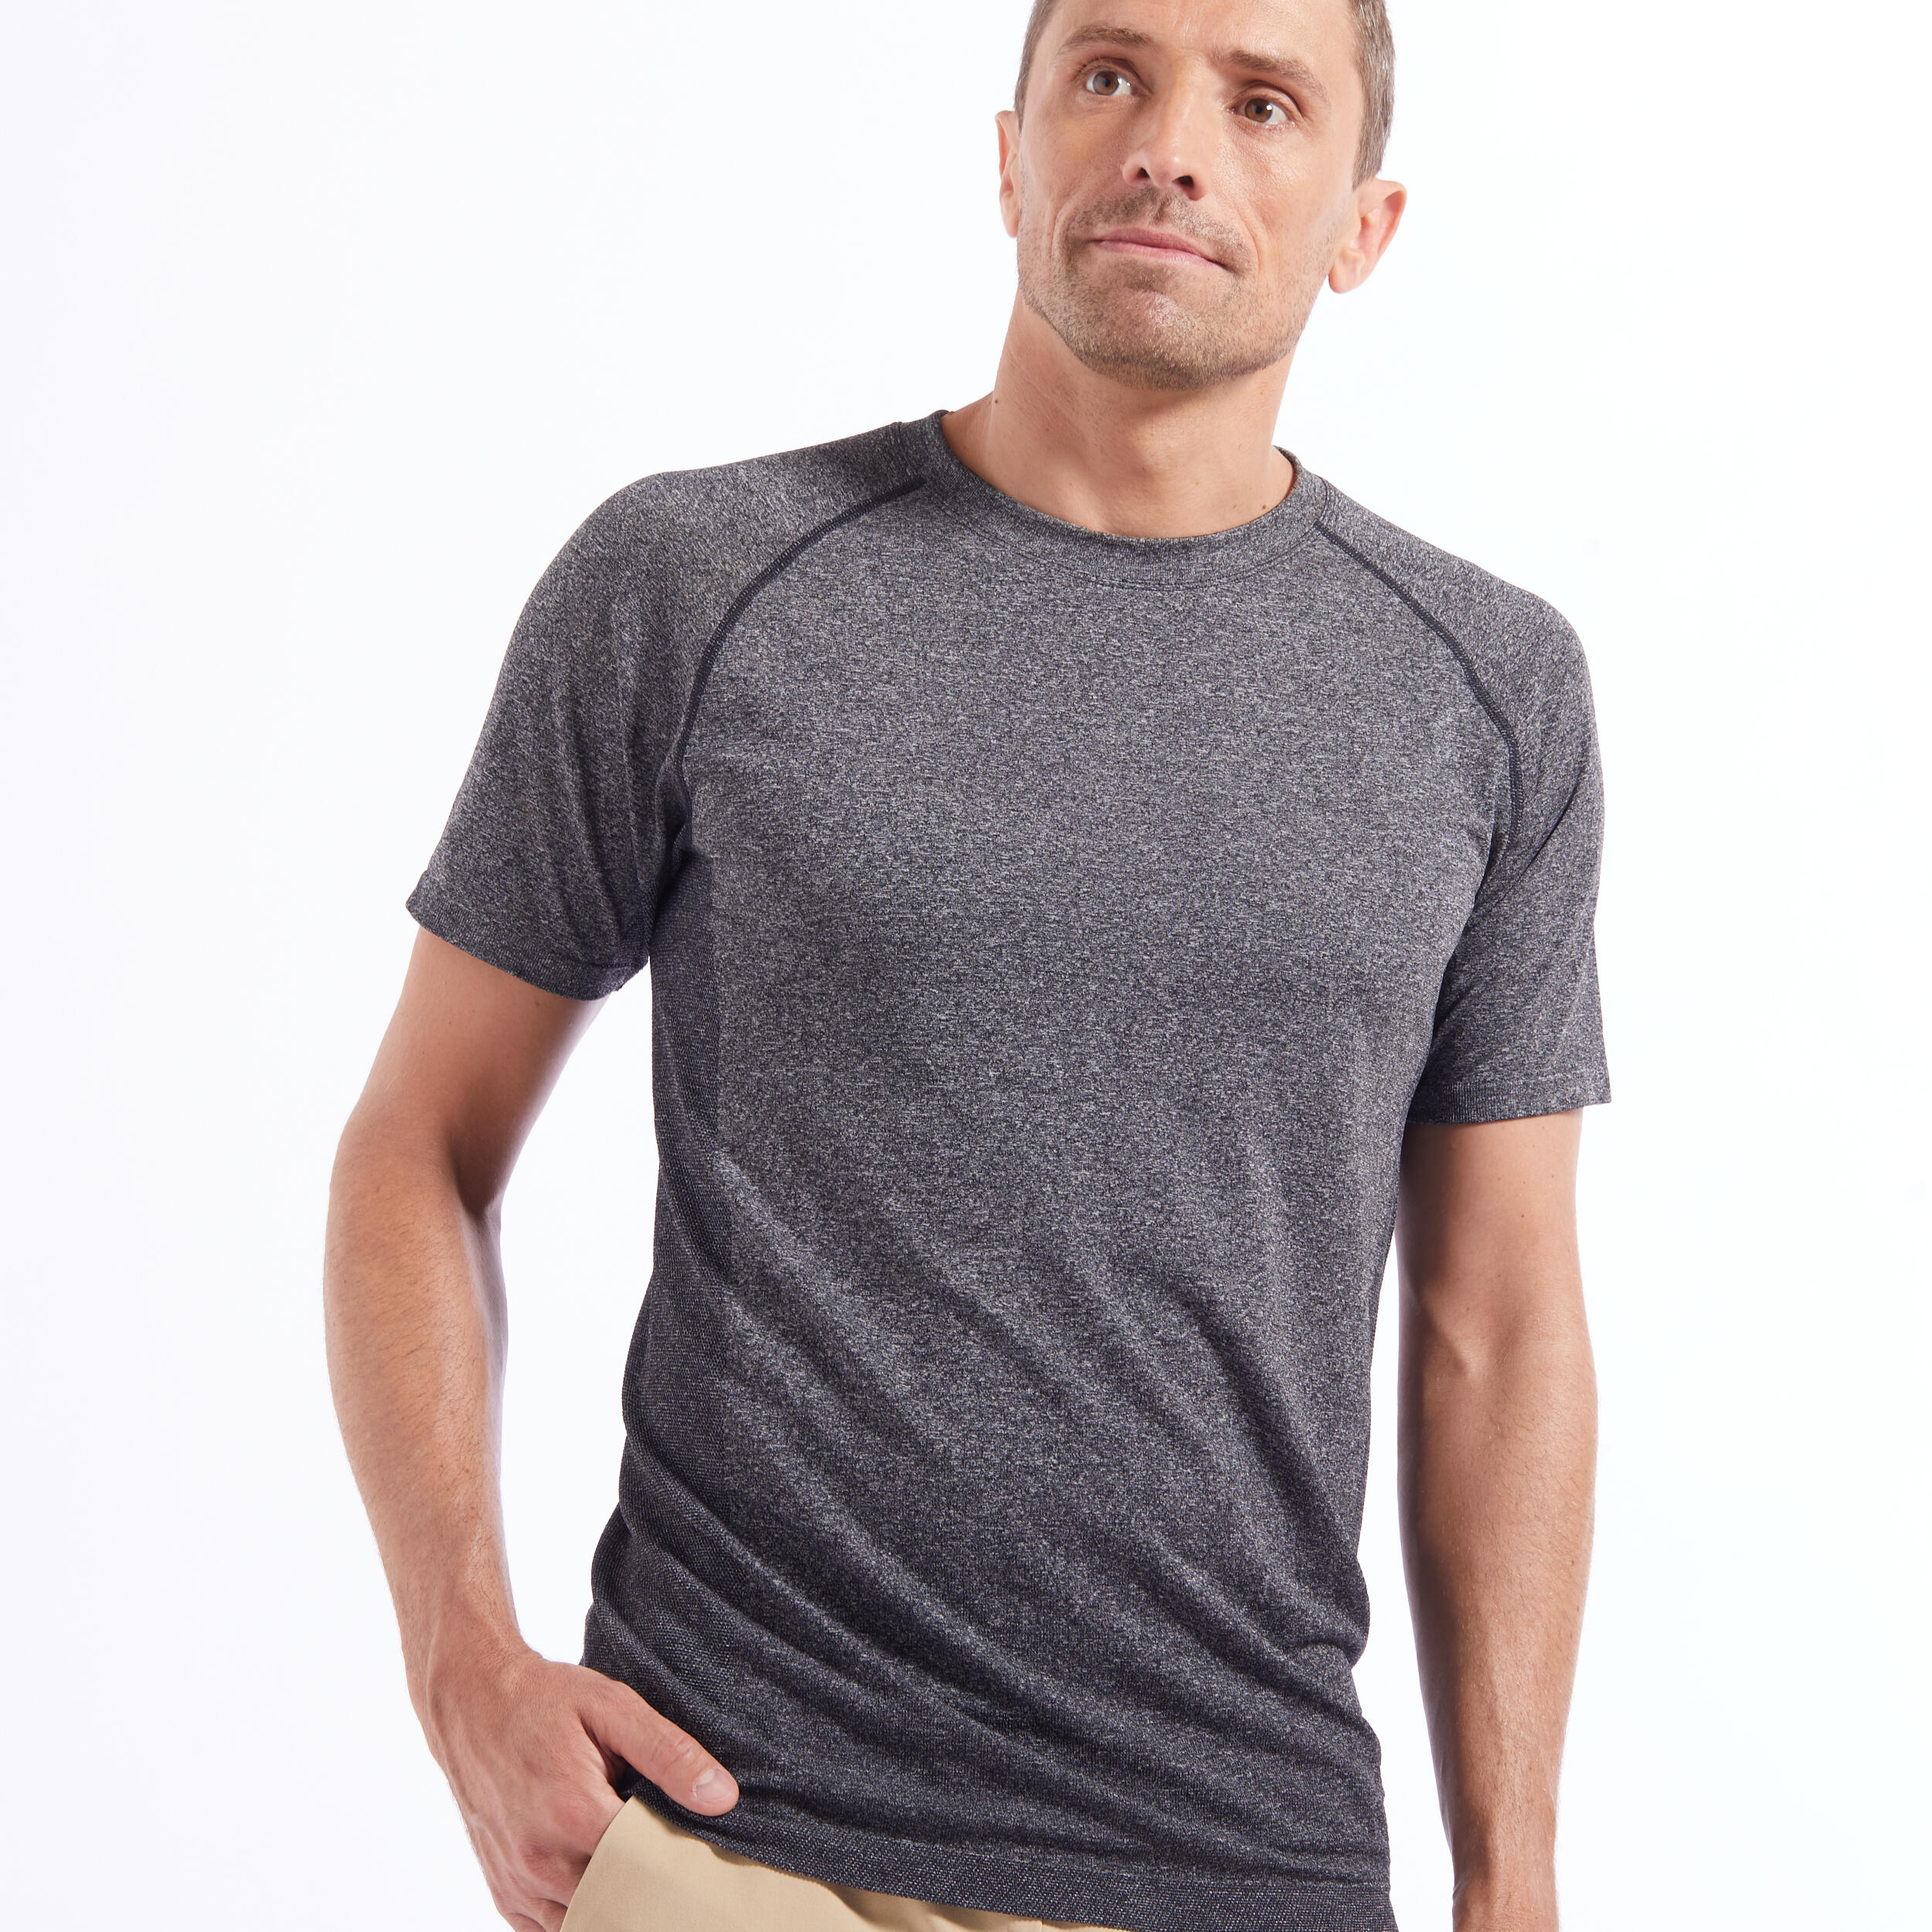 KIMJALY Men's Seamless Short-Sleeved Dynamic Yoga T-Shirt - Dark Grey